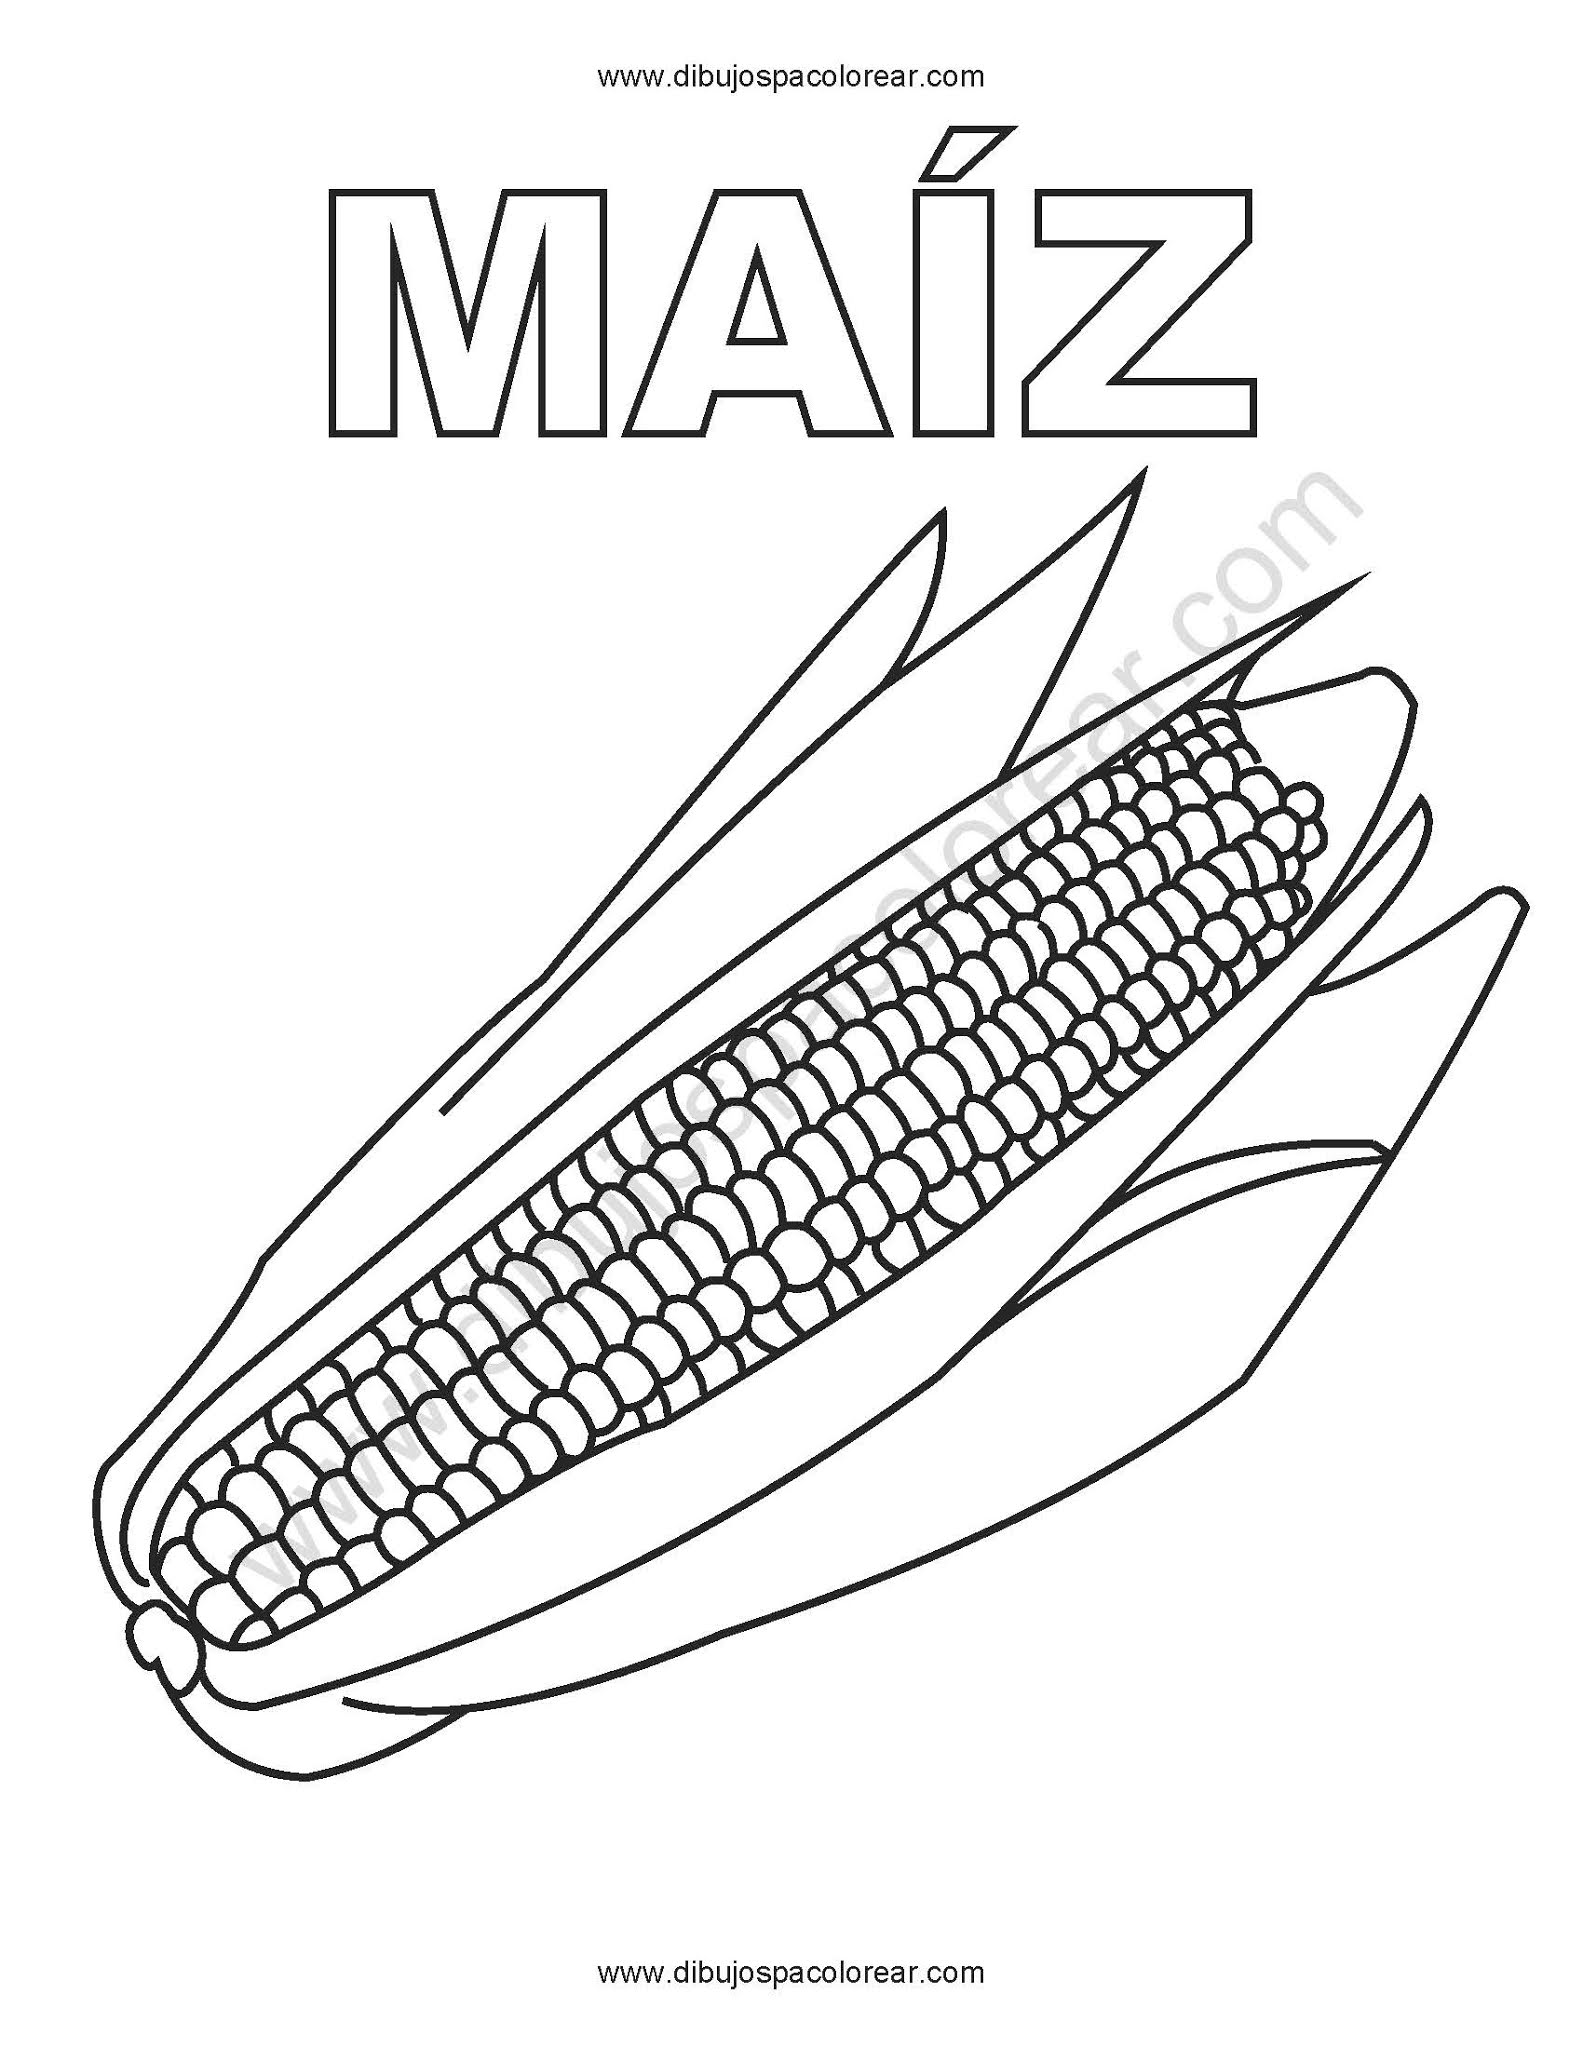 Dibujo para colorear Elote, mazorca, maíz, choclo, corn